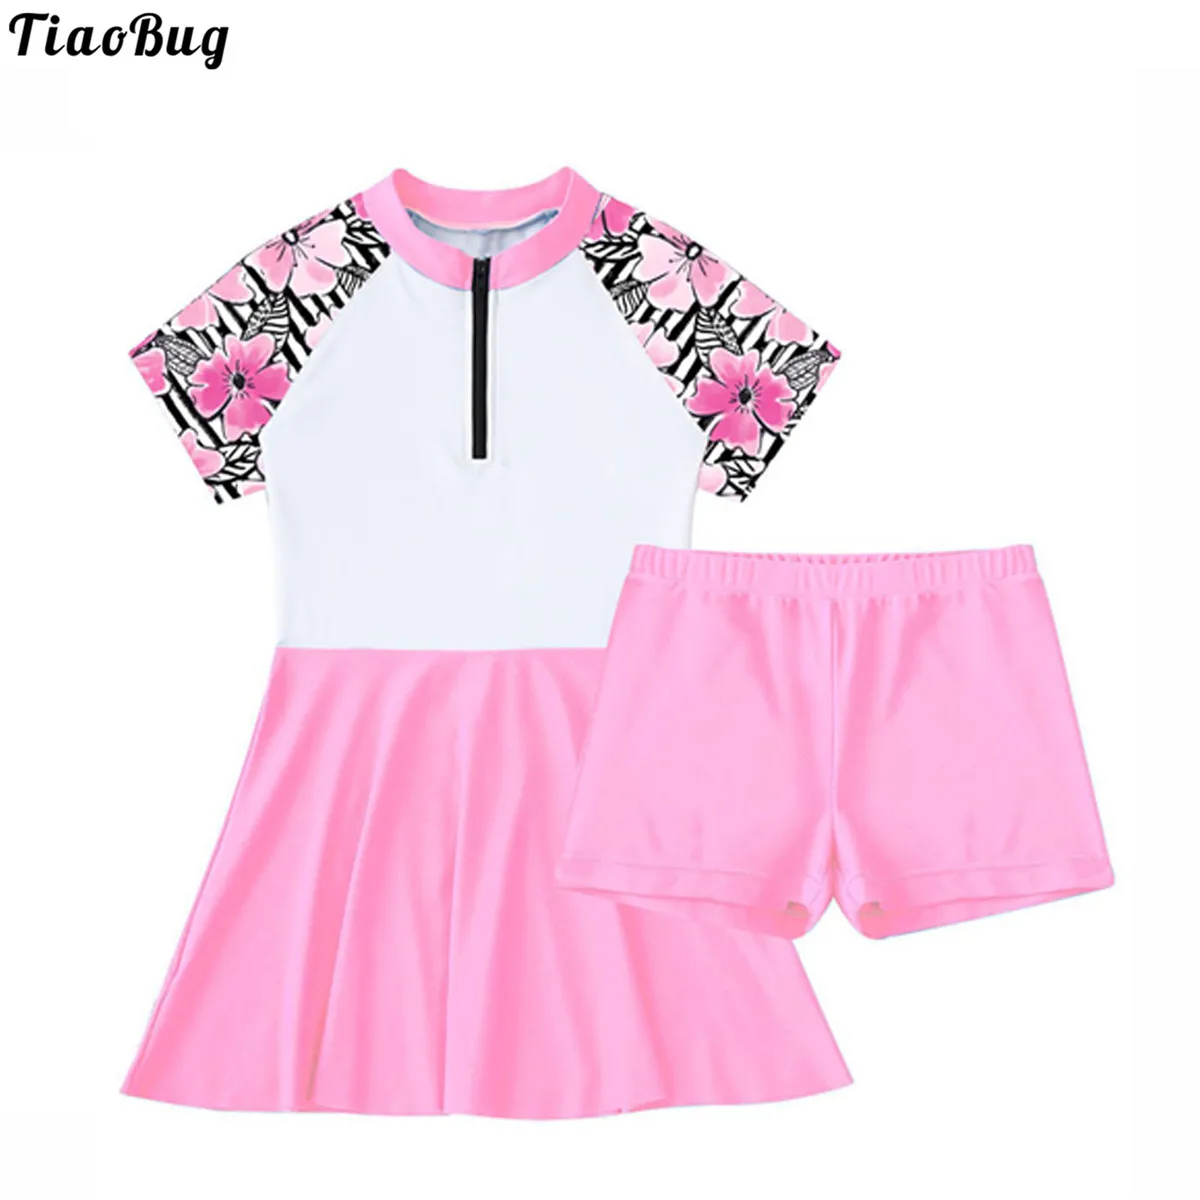 TiaoBug Summer Kid Girls 2Pcs Swimsuit Stand Collar Short Sleeves Front Zipper Swimming Dress With Shorts Bikini Pool Beach Suit